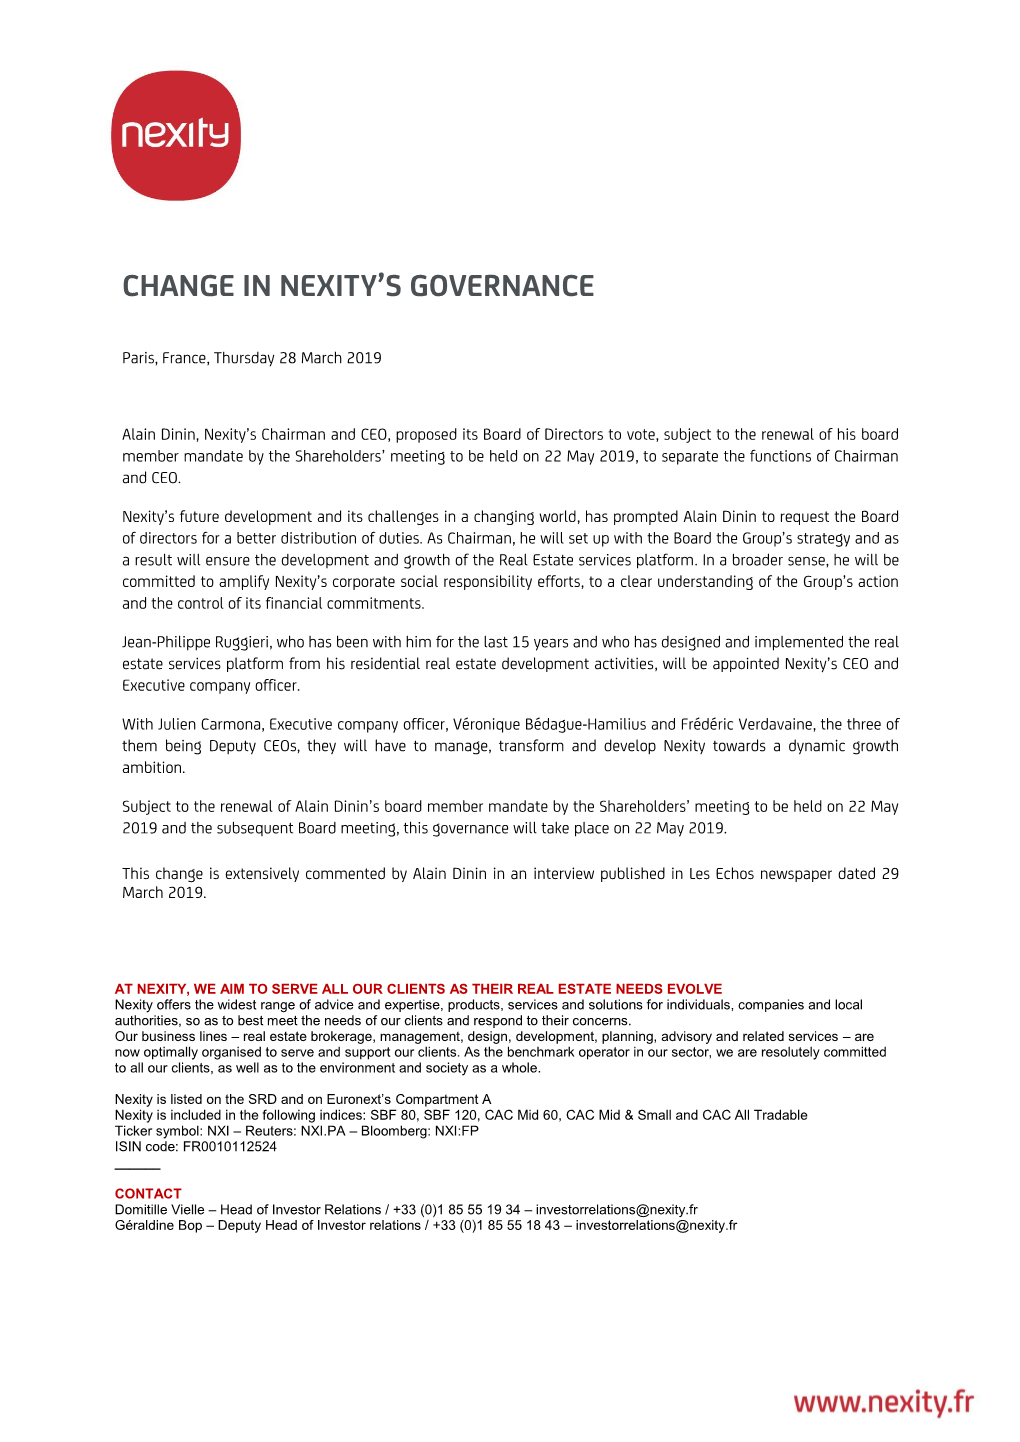 Change in Nexity's Governance